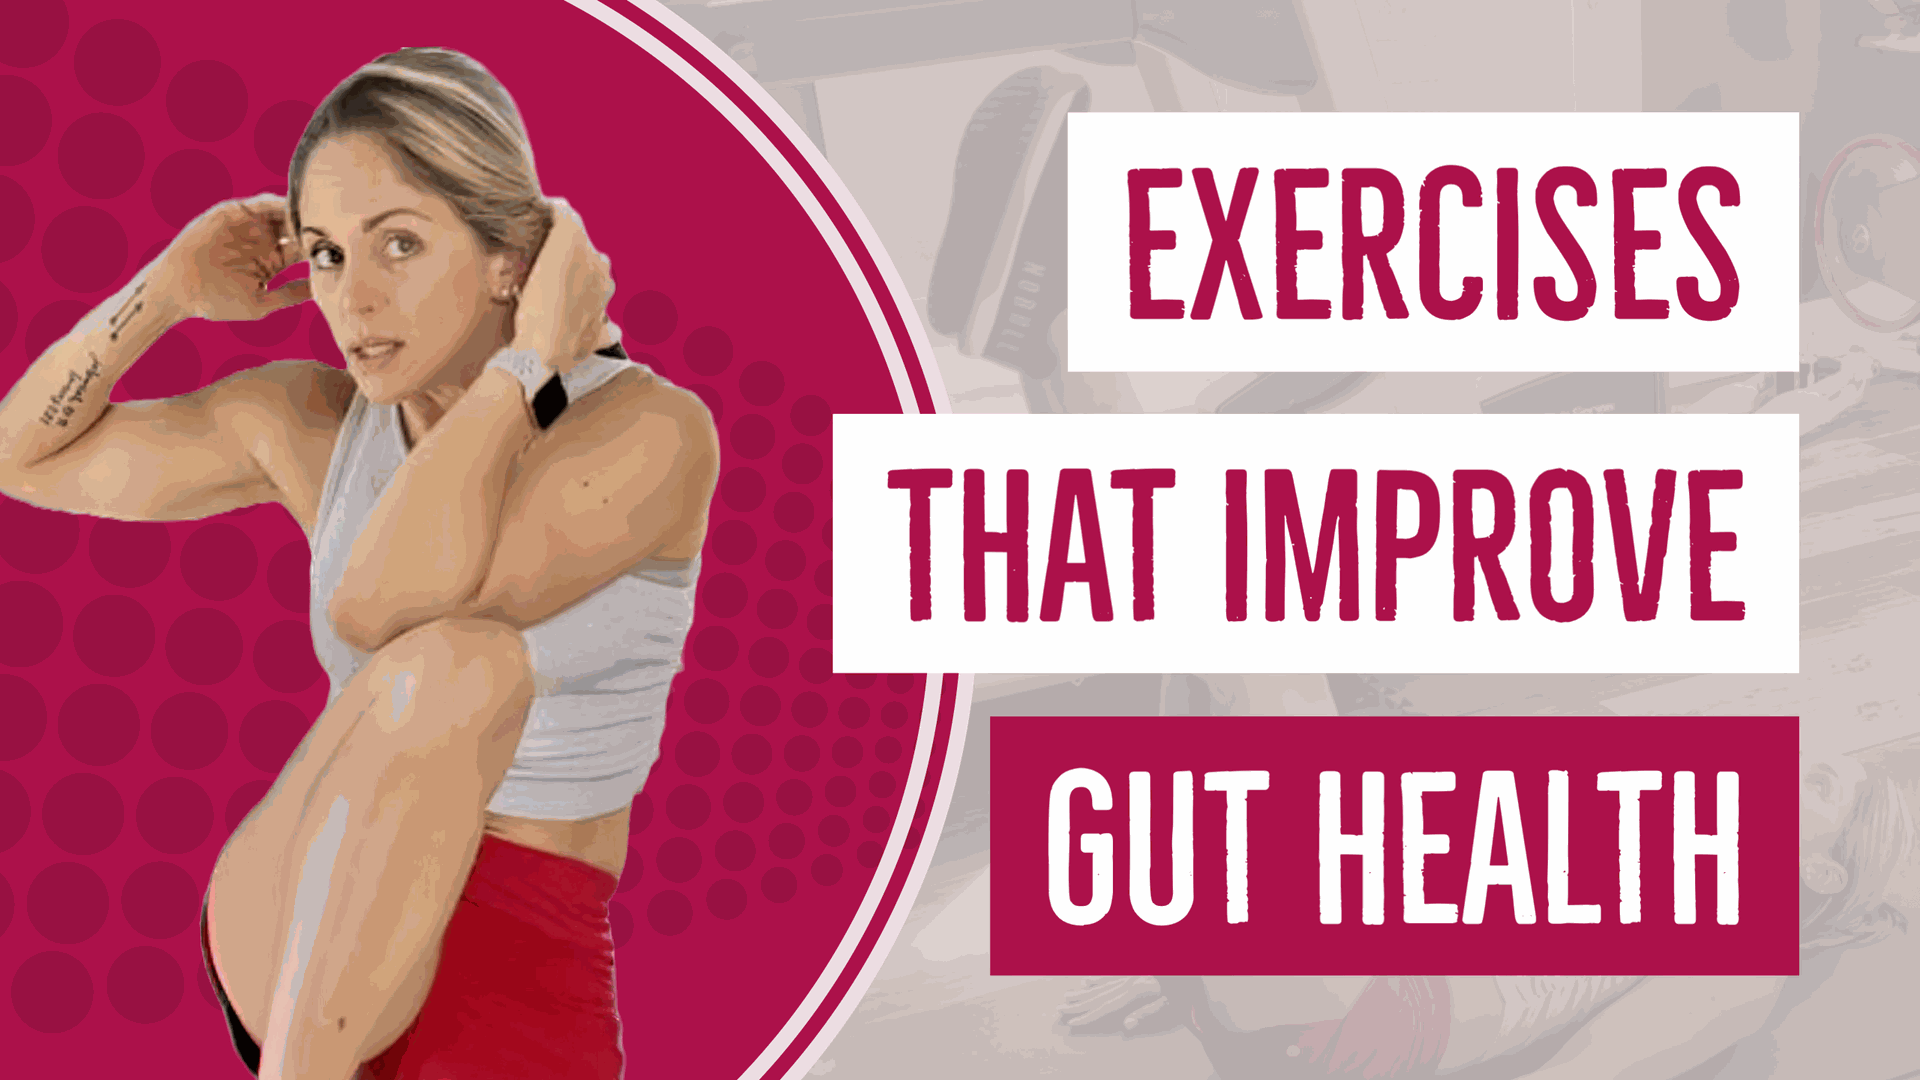 gut health exercises molly duncan excerises that improve gut health